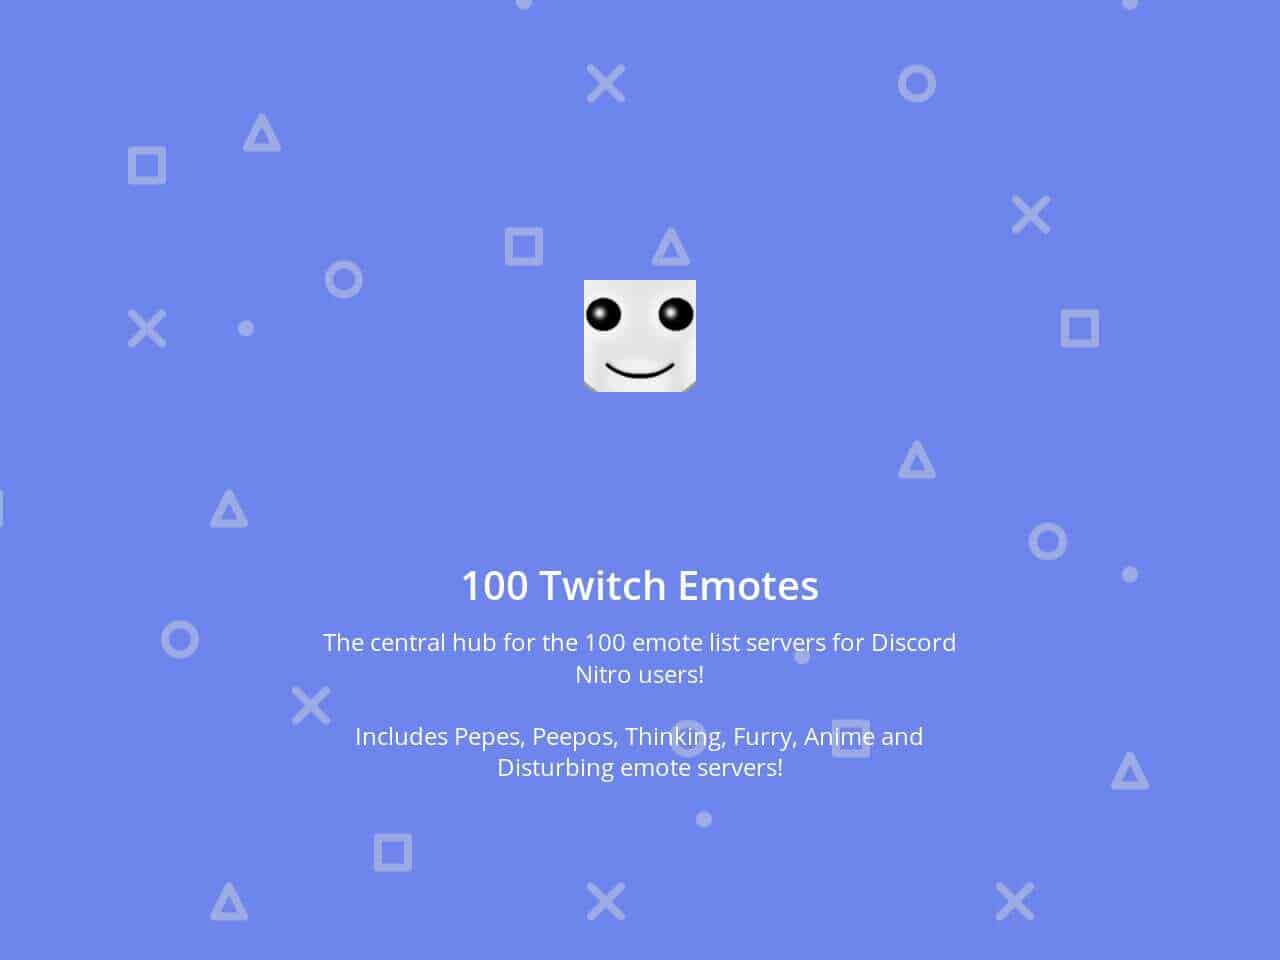 Twitch Emotes on Discord